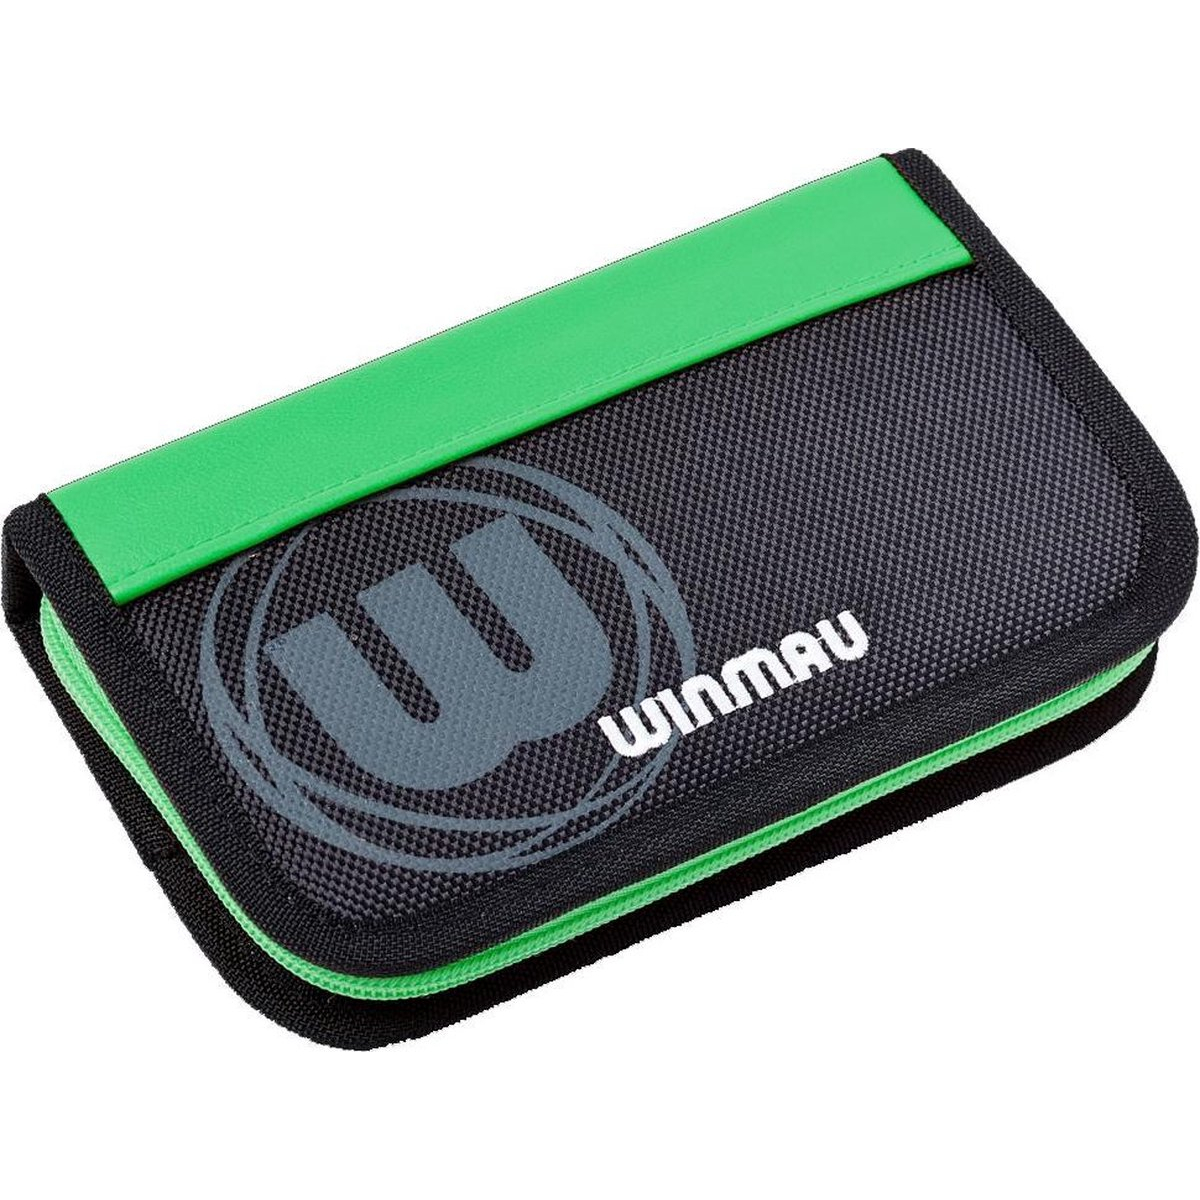  Winmau Urban Pro dartcase groen